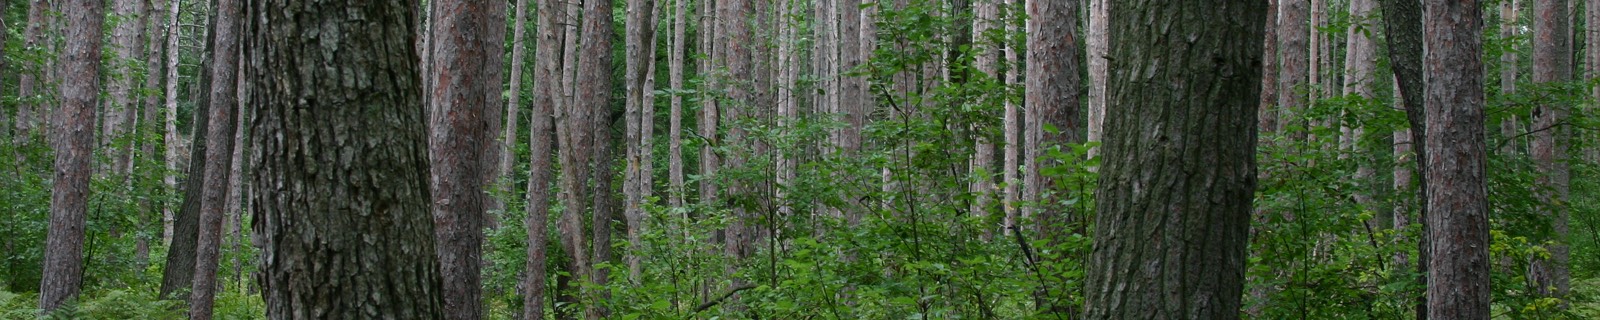 Red Pine on Wilderness Trail